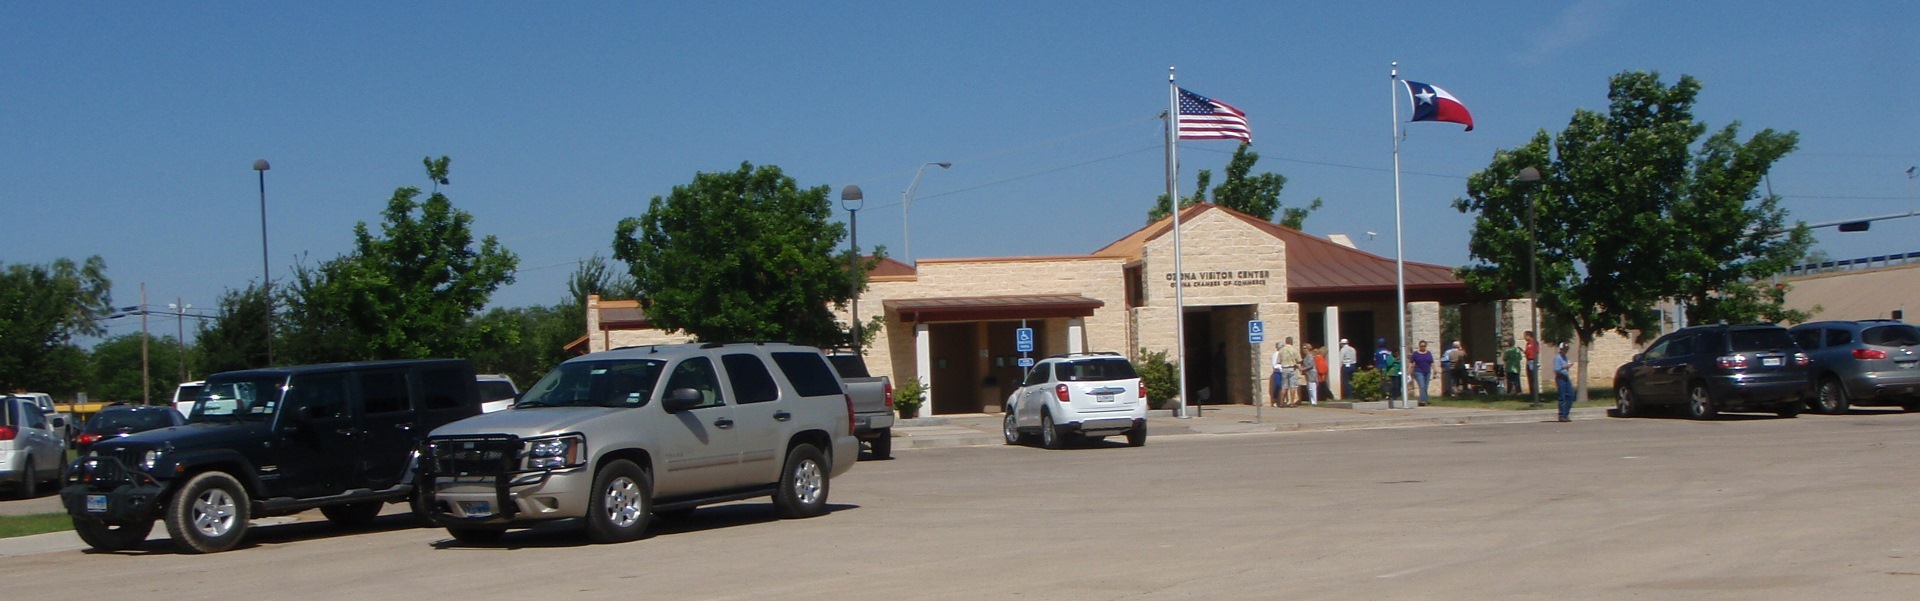 Ozona Visitor Center Exterior Banner